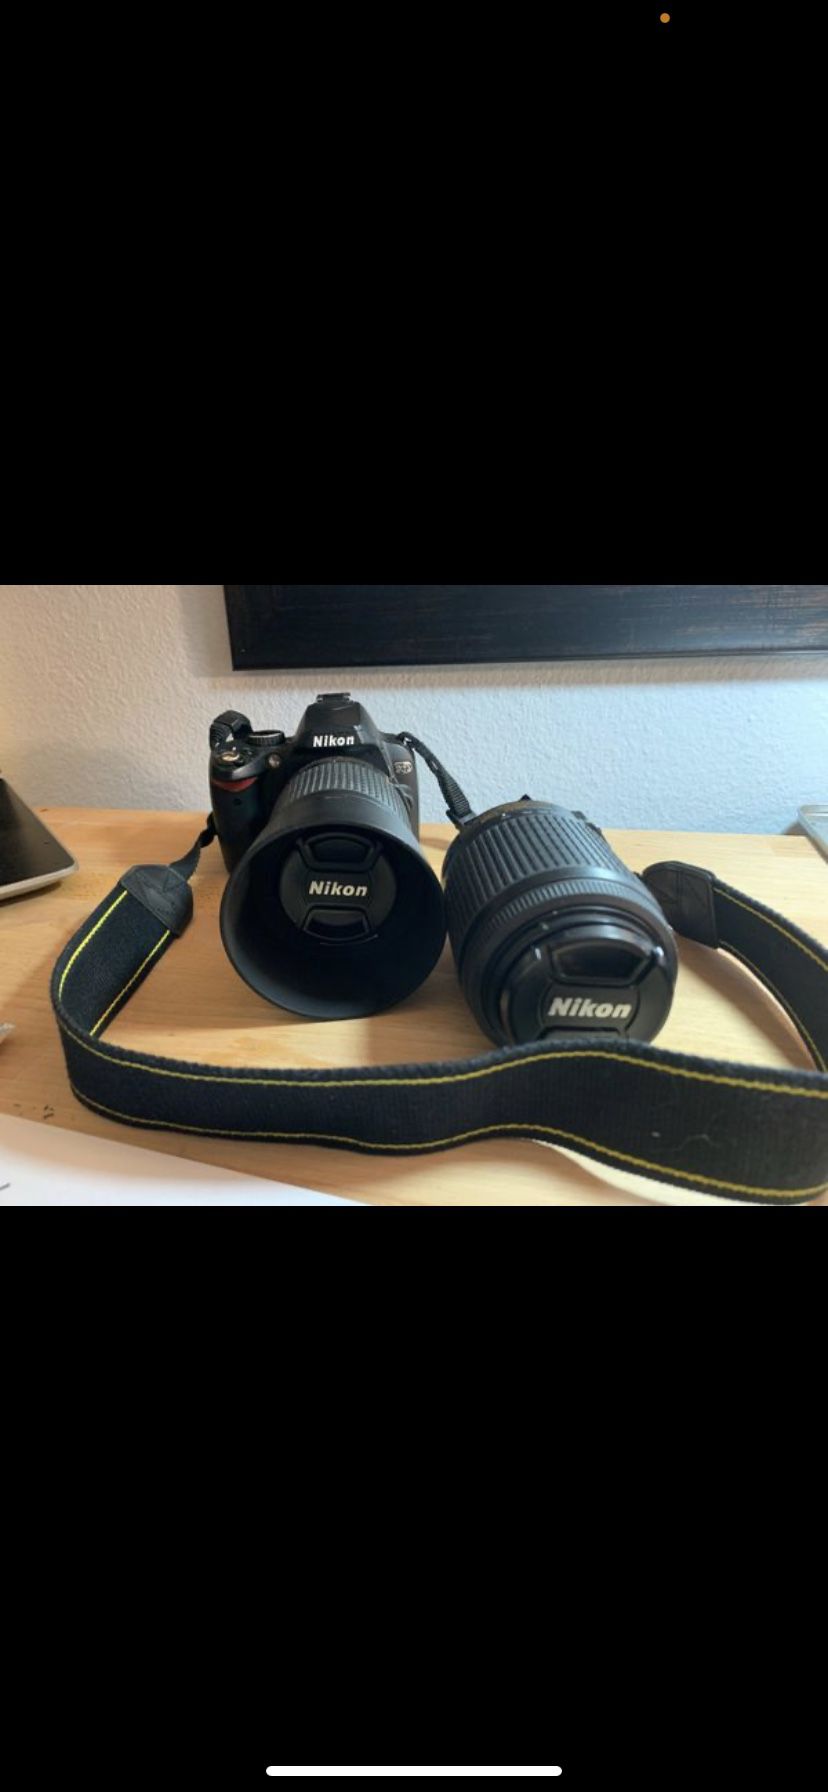 Nikon digital camera D60